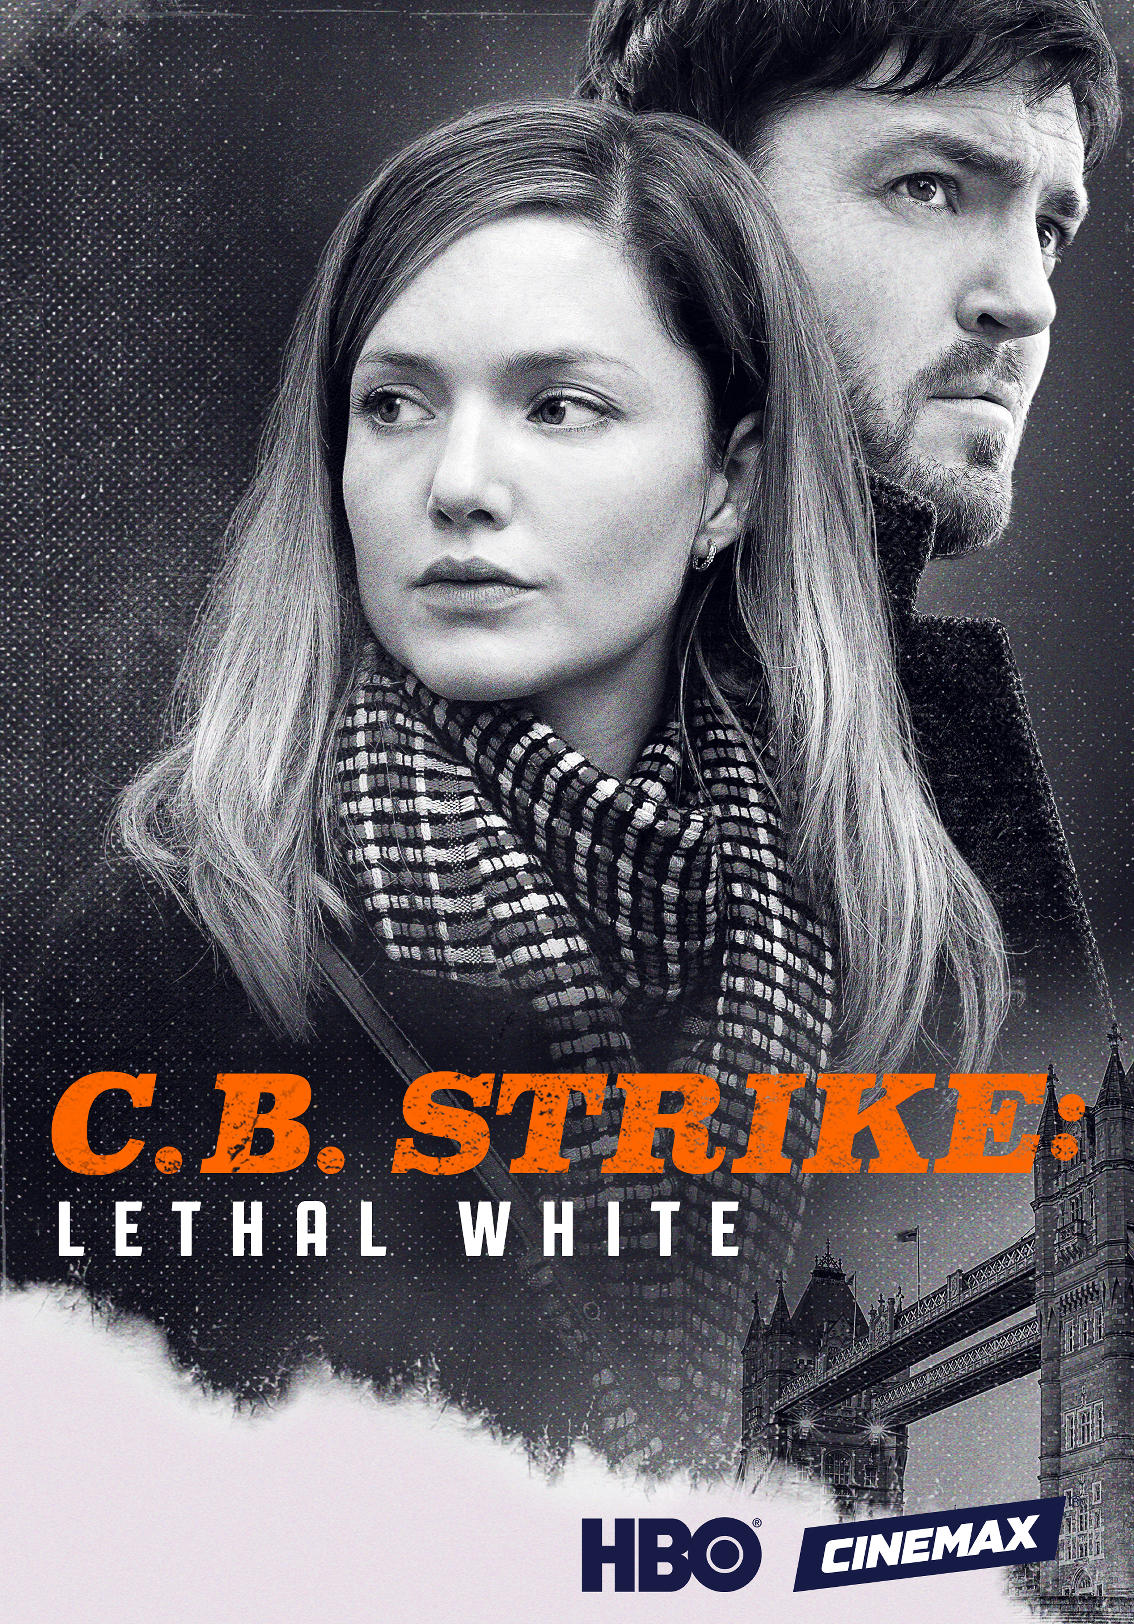 cb strike season 2 episode 1 recap